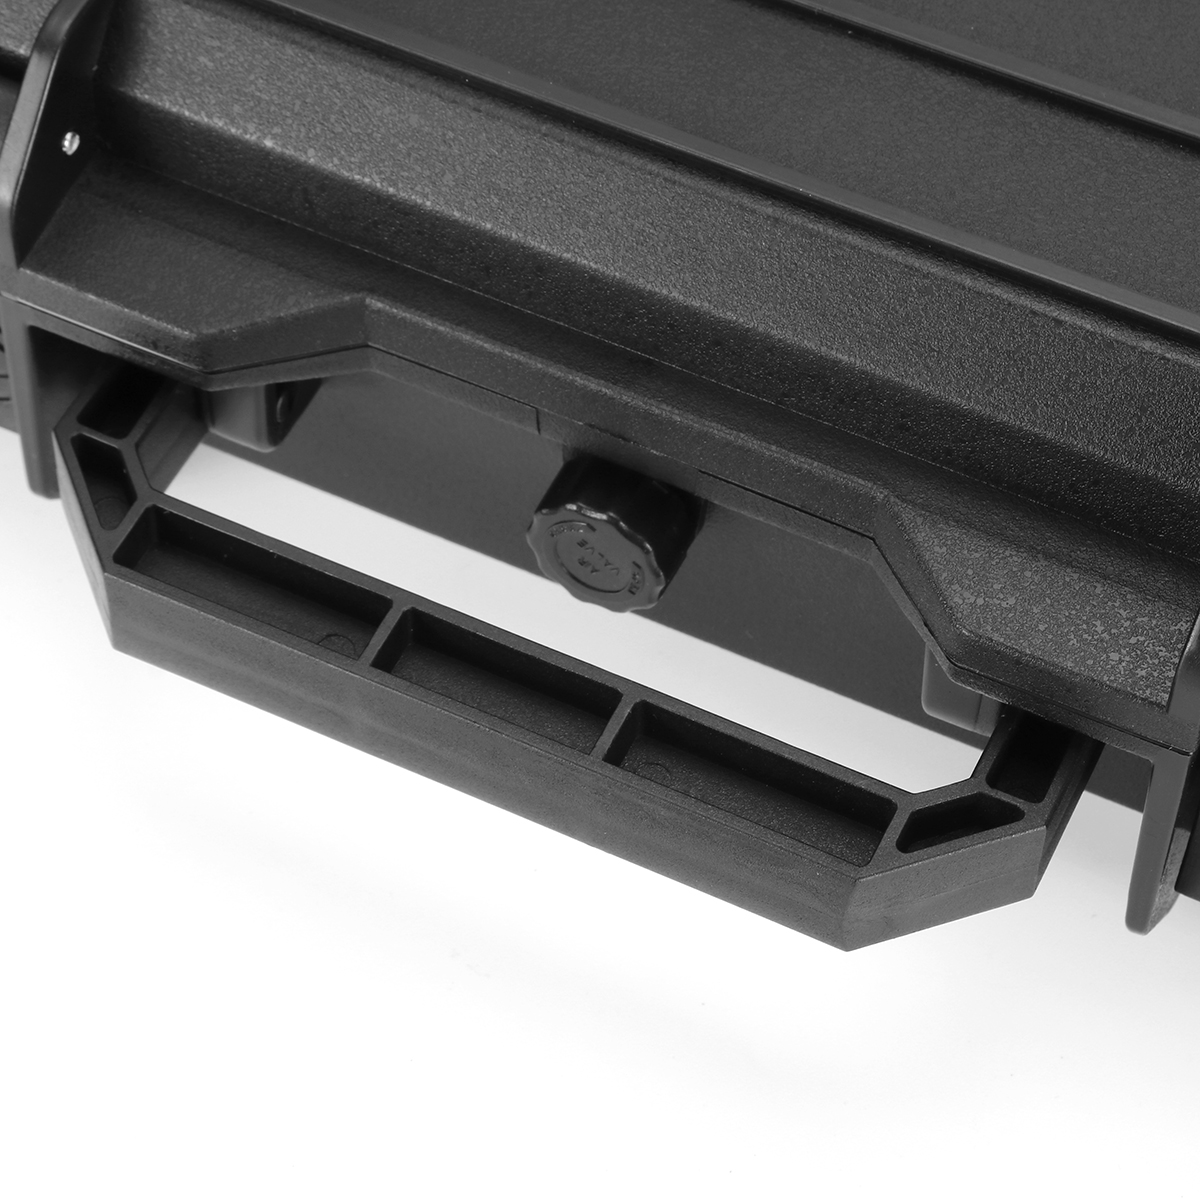 Waterproof-Hard-Carry-Case-Tool-Kits-Impact-Resistant-Shockproof-Storage-Box-New-1658756-8